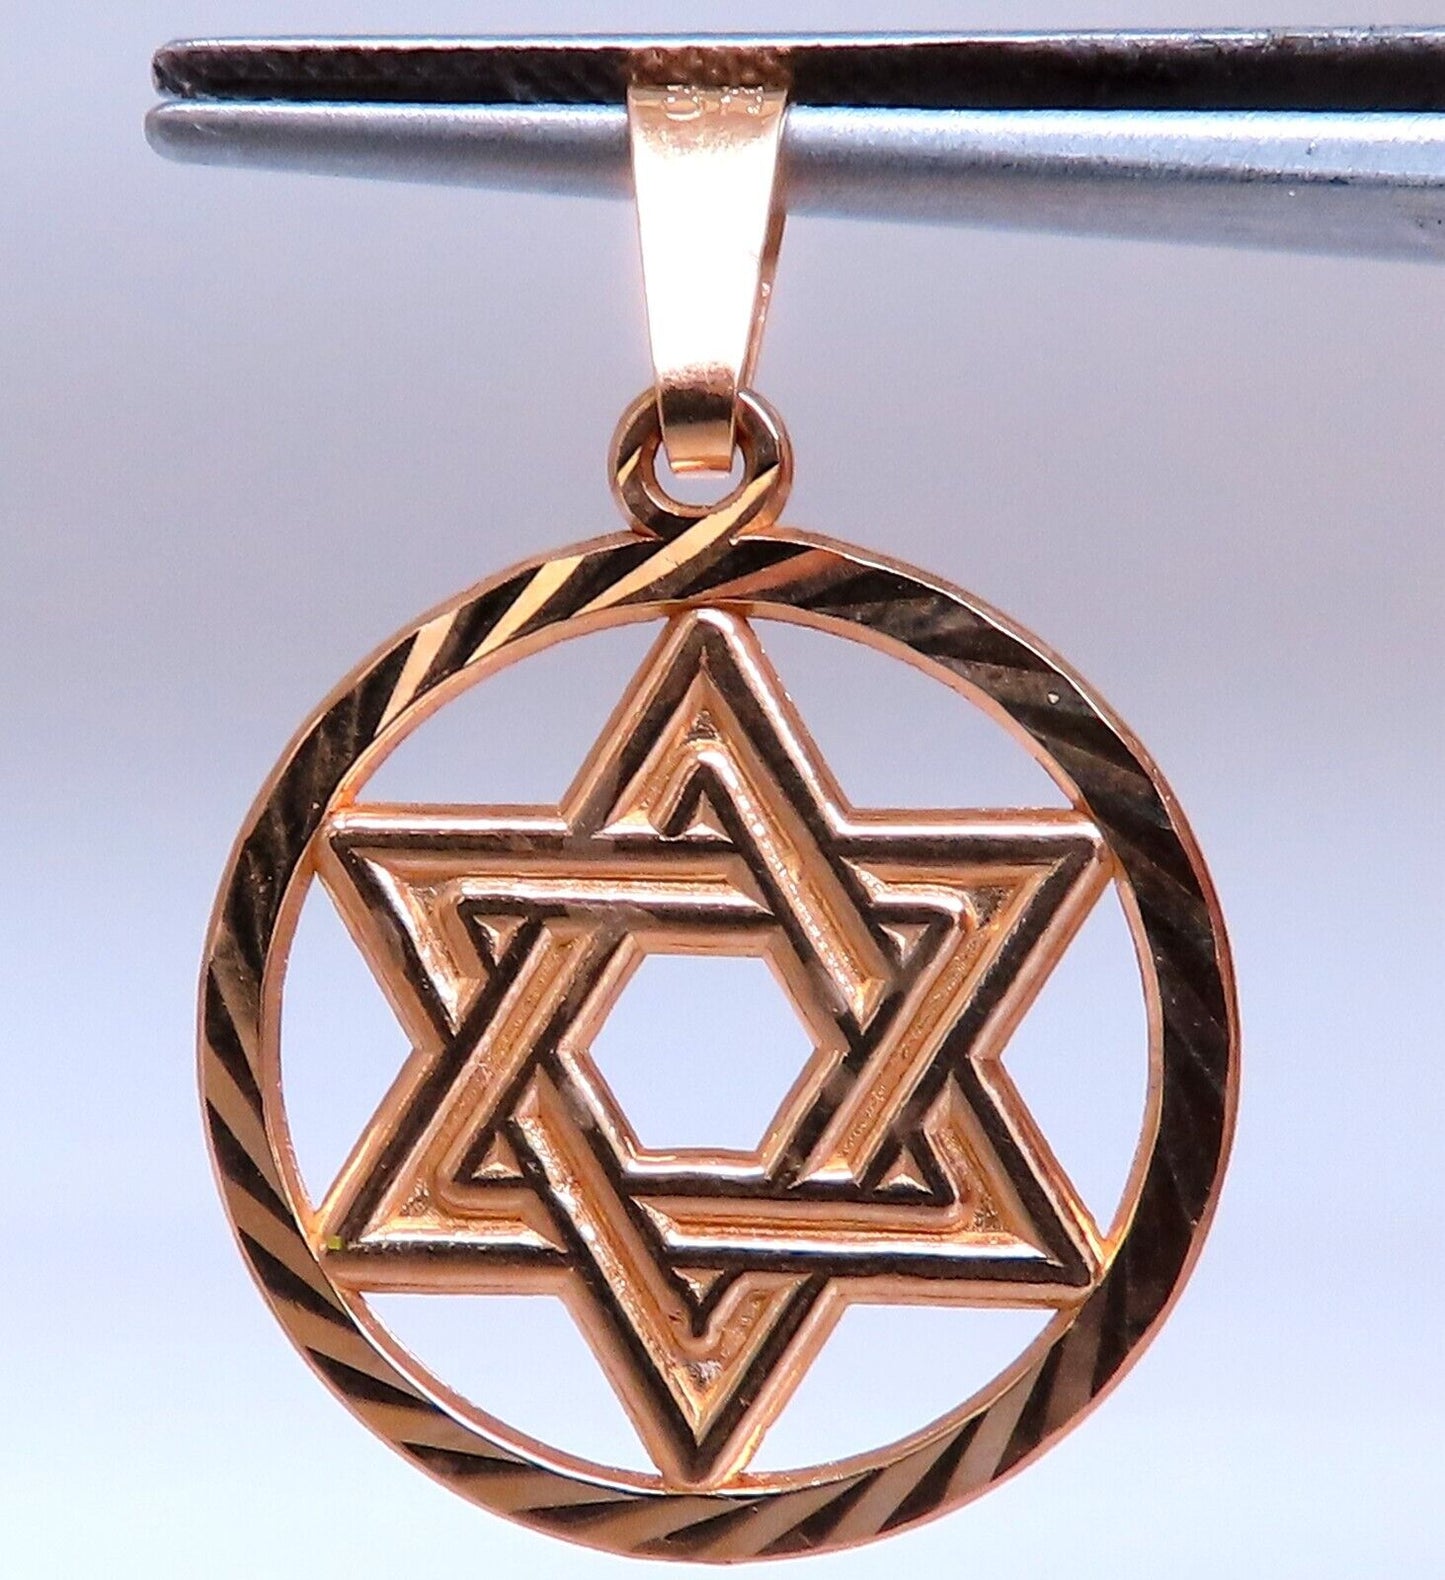 Star Of David 14kt gold Charm Pendant